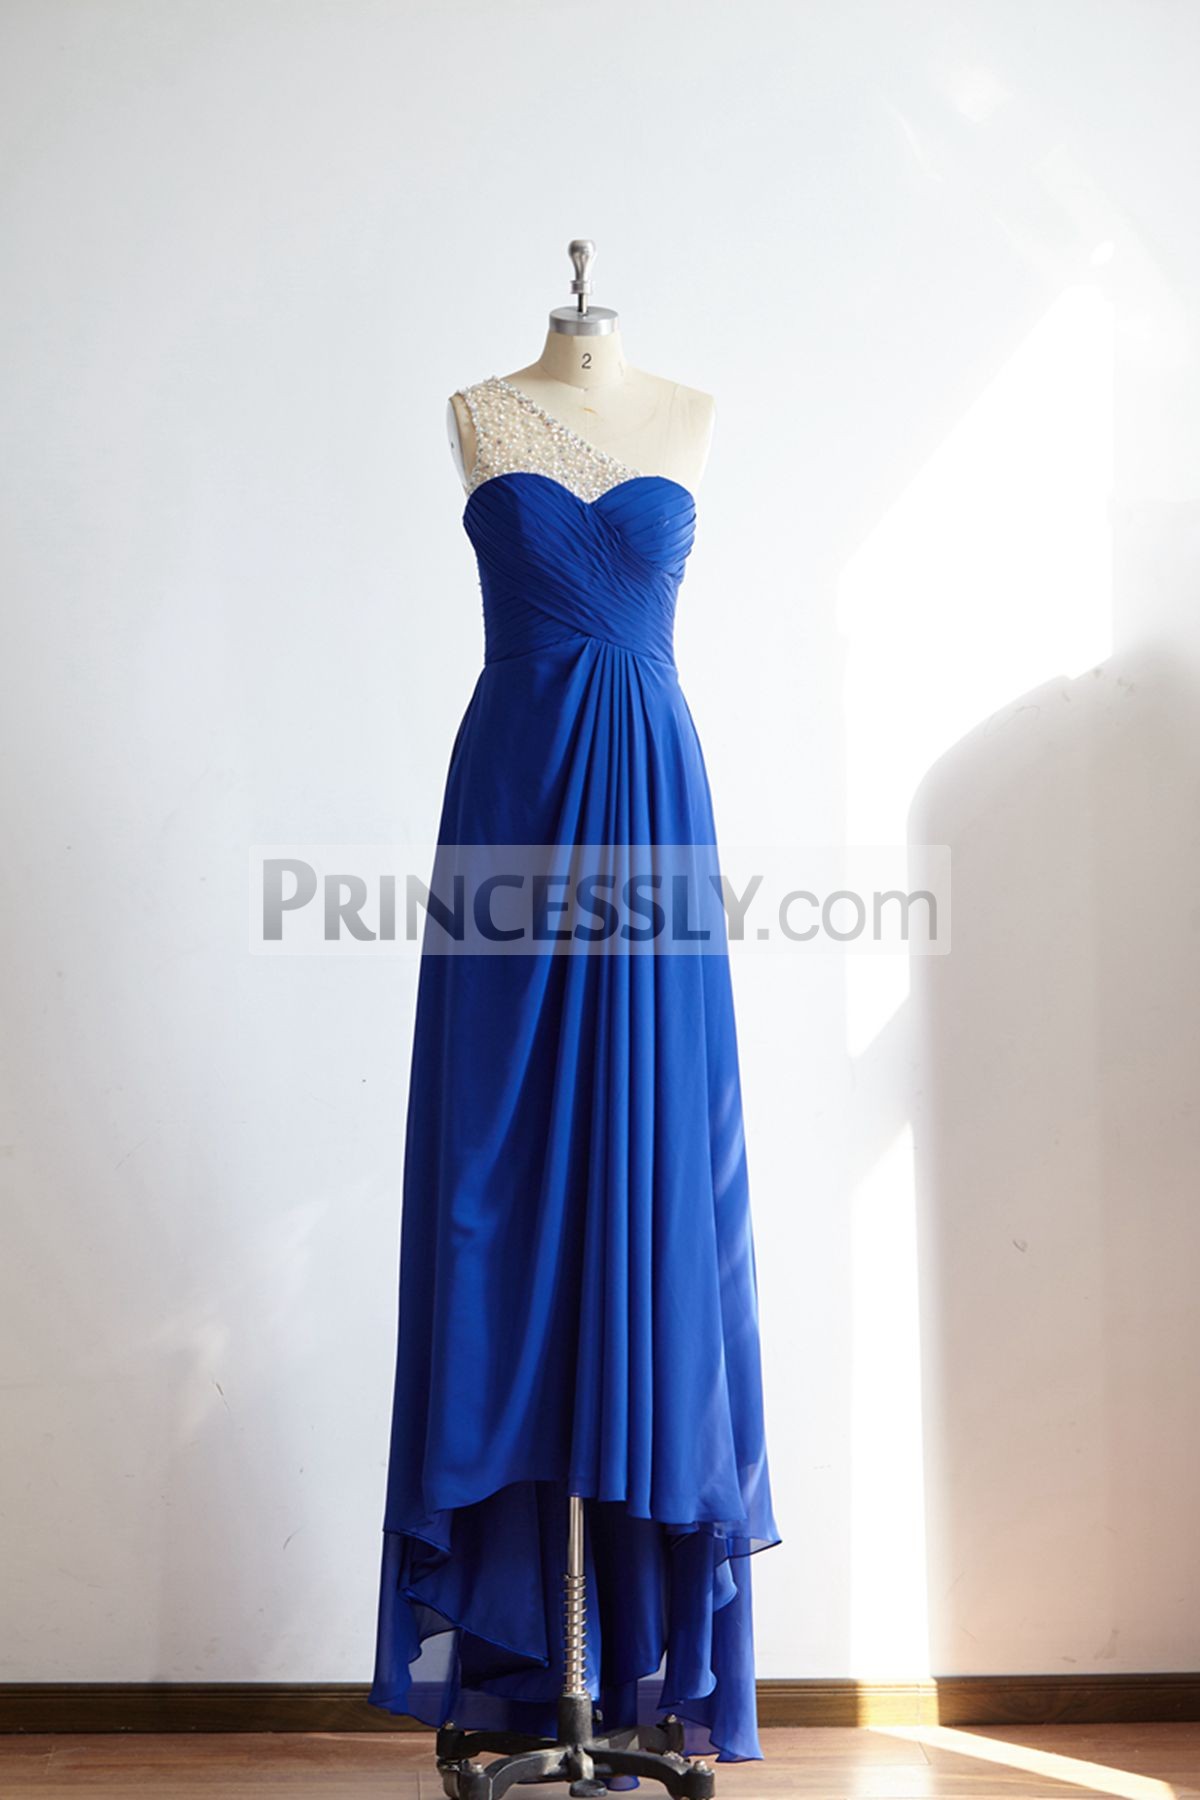 Princessly.com-K1000320-One Shoulder Royal Blue Beaded Chiffon Long Prom Party Dress-31